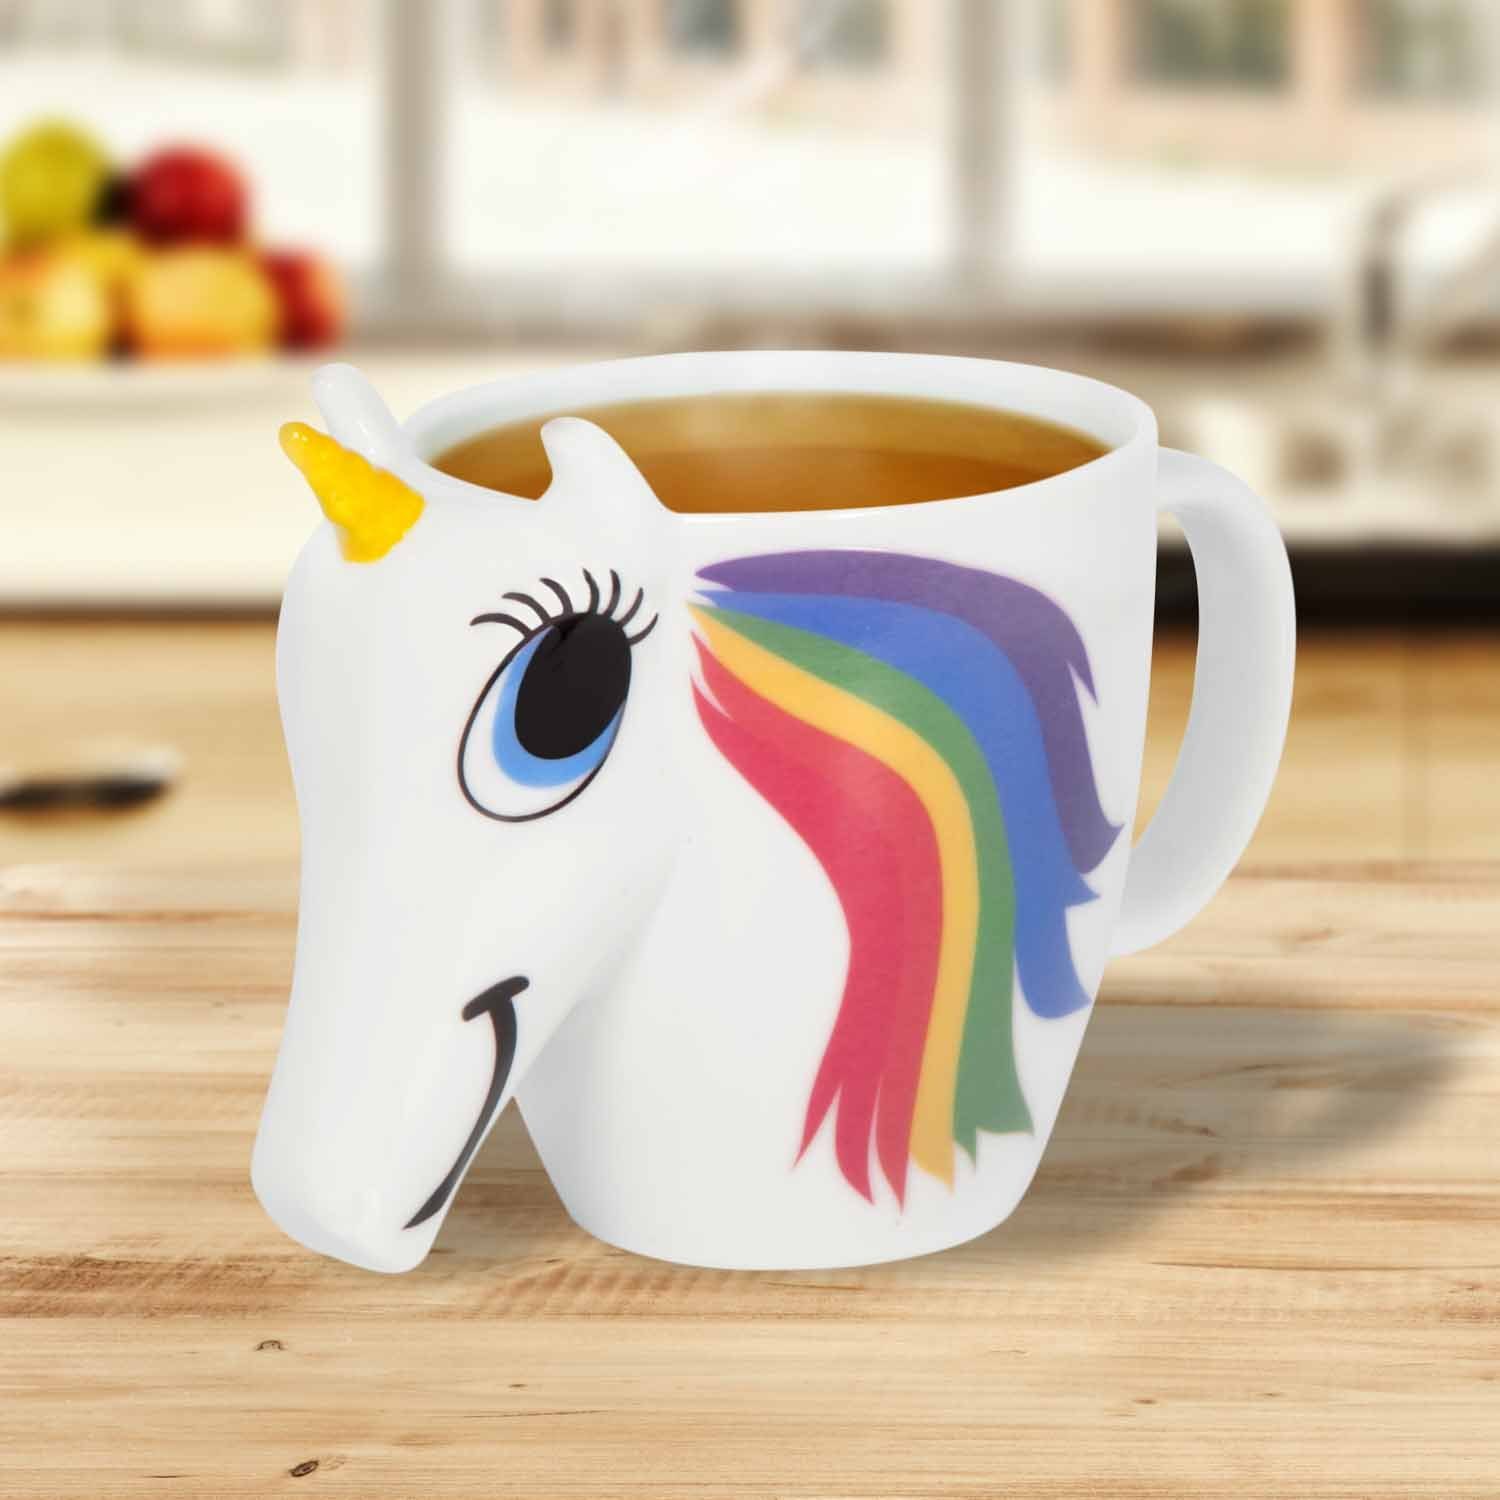 Thumbs Up Tasse Tasse "Unicorn Mug" - Einhorn Tasse mit Farbwechsel, Keramik, Farbwechseleffekt | Teetassen